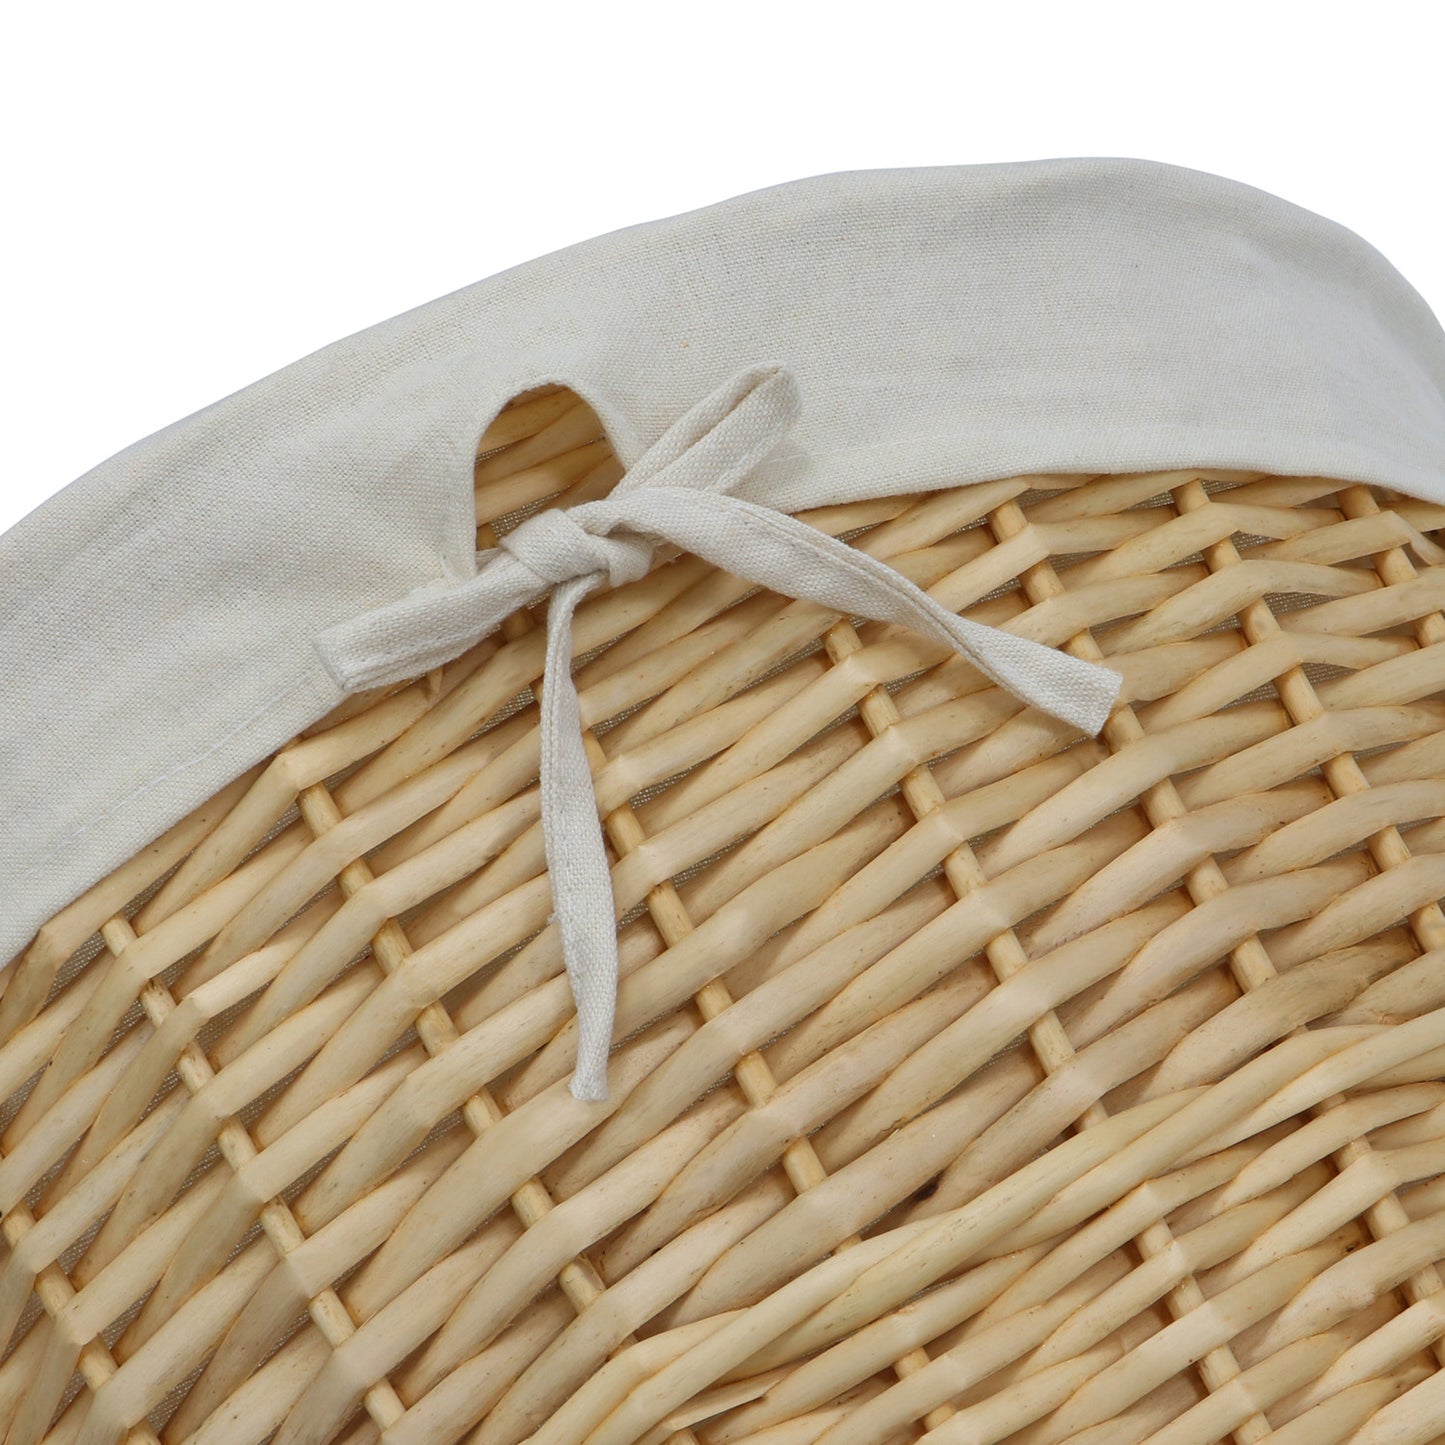 Acacia Honey Round Willow Laundry Basket